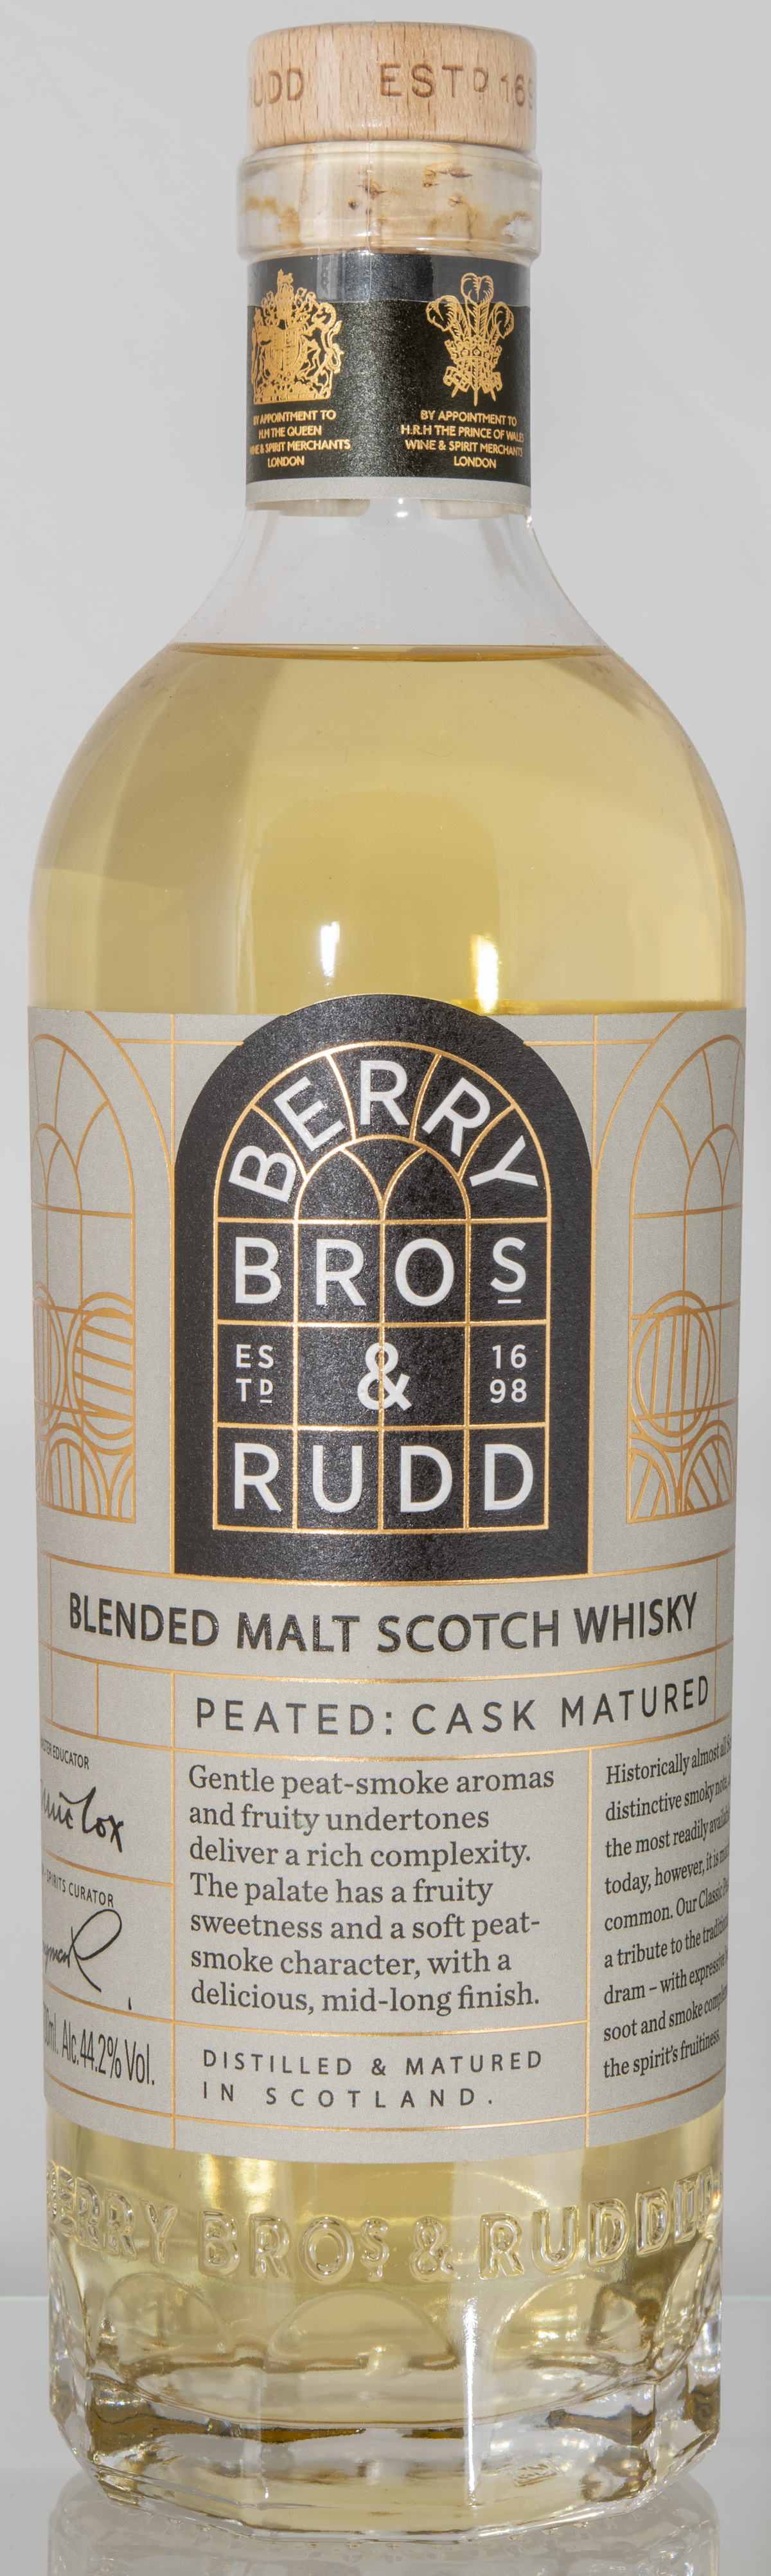 Billede: D85_8299 - Berry Bros and Rudd - Peated Cask Matured - bottle front.jpg